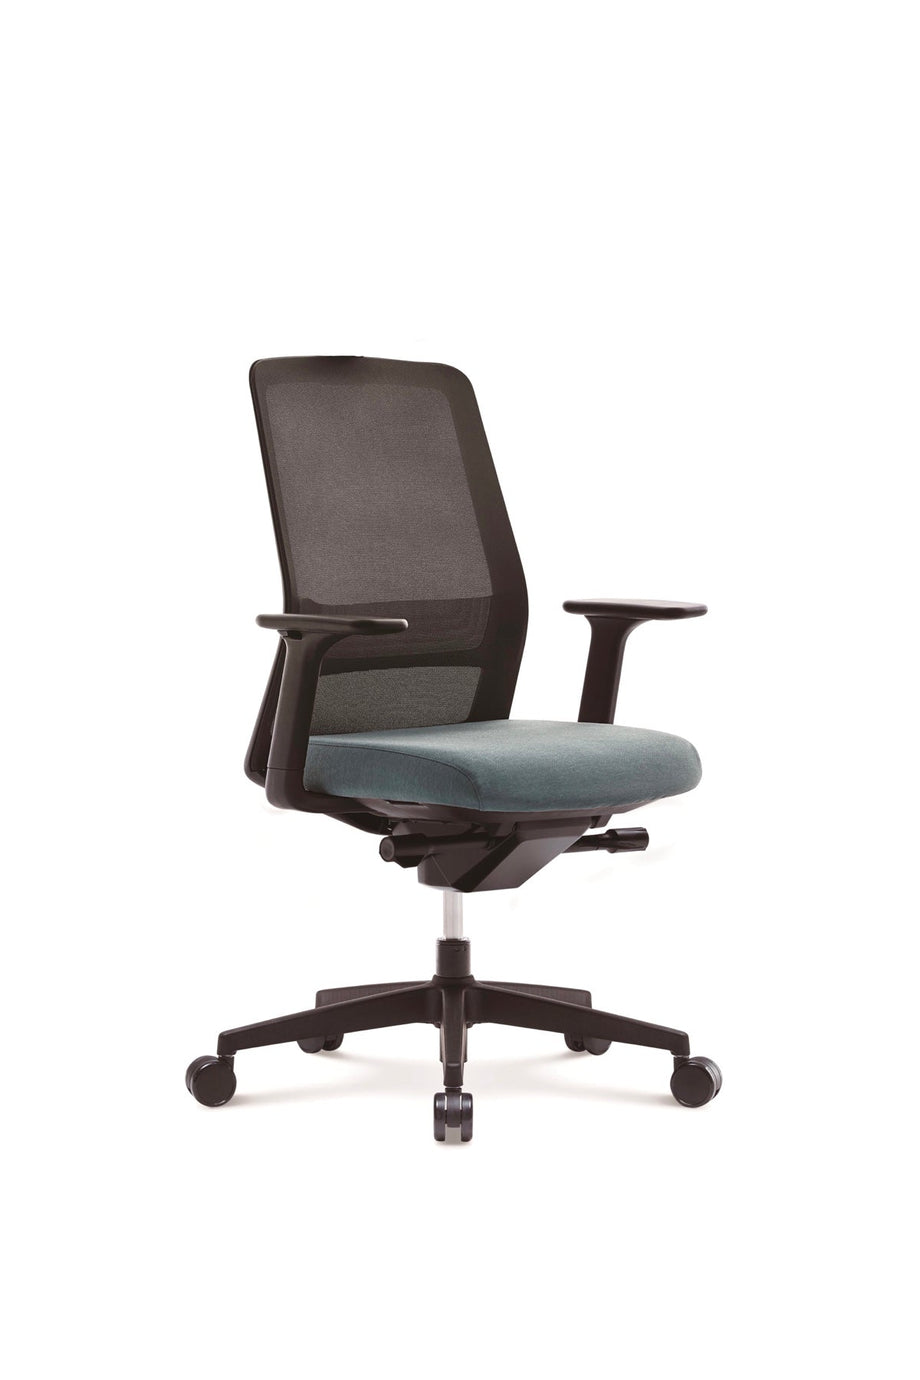 FURSYS SIDIZ T40 Black Frame Home Office Desk Chair - SIHOO AustraliaFURSYS SIDIZ T40 Black Frame Home Office Desk Chair